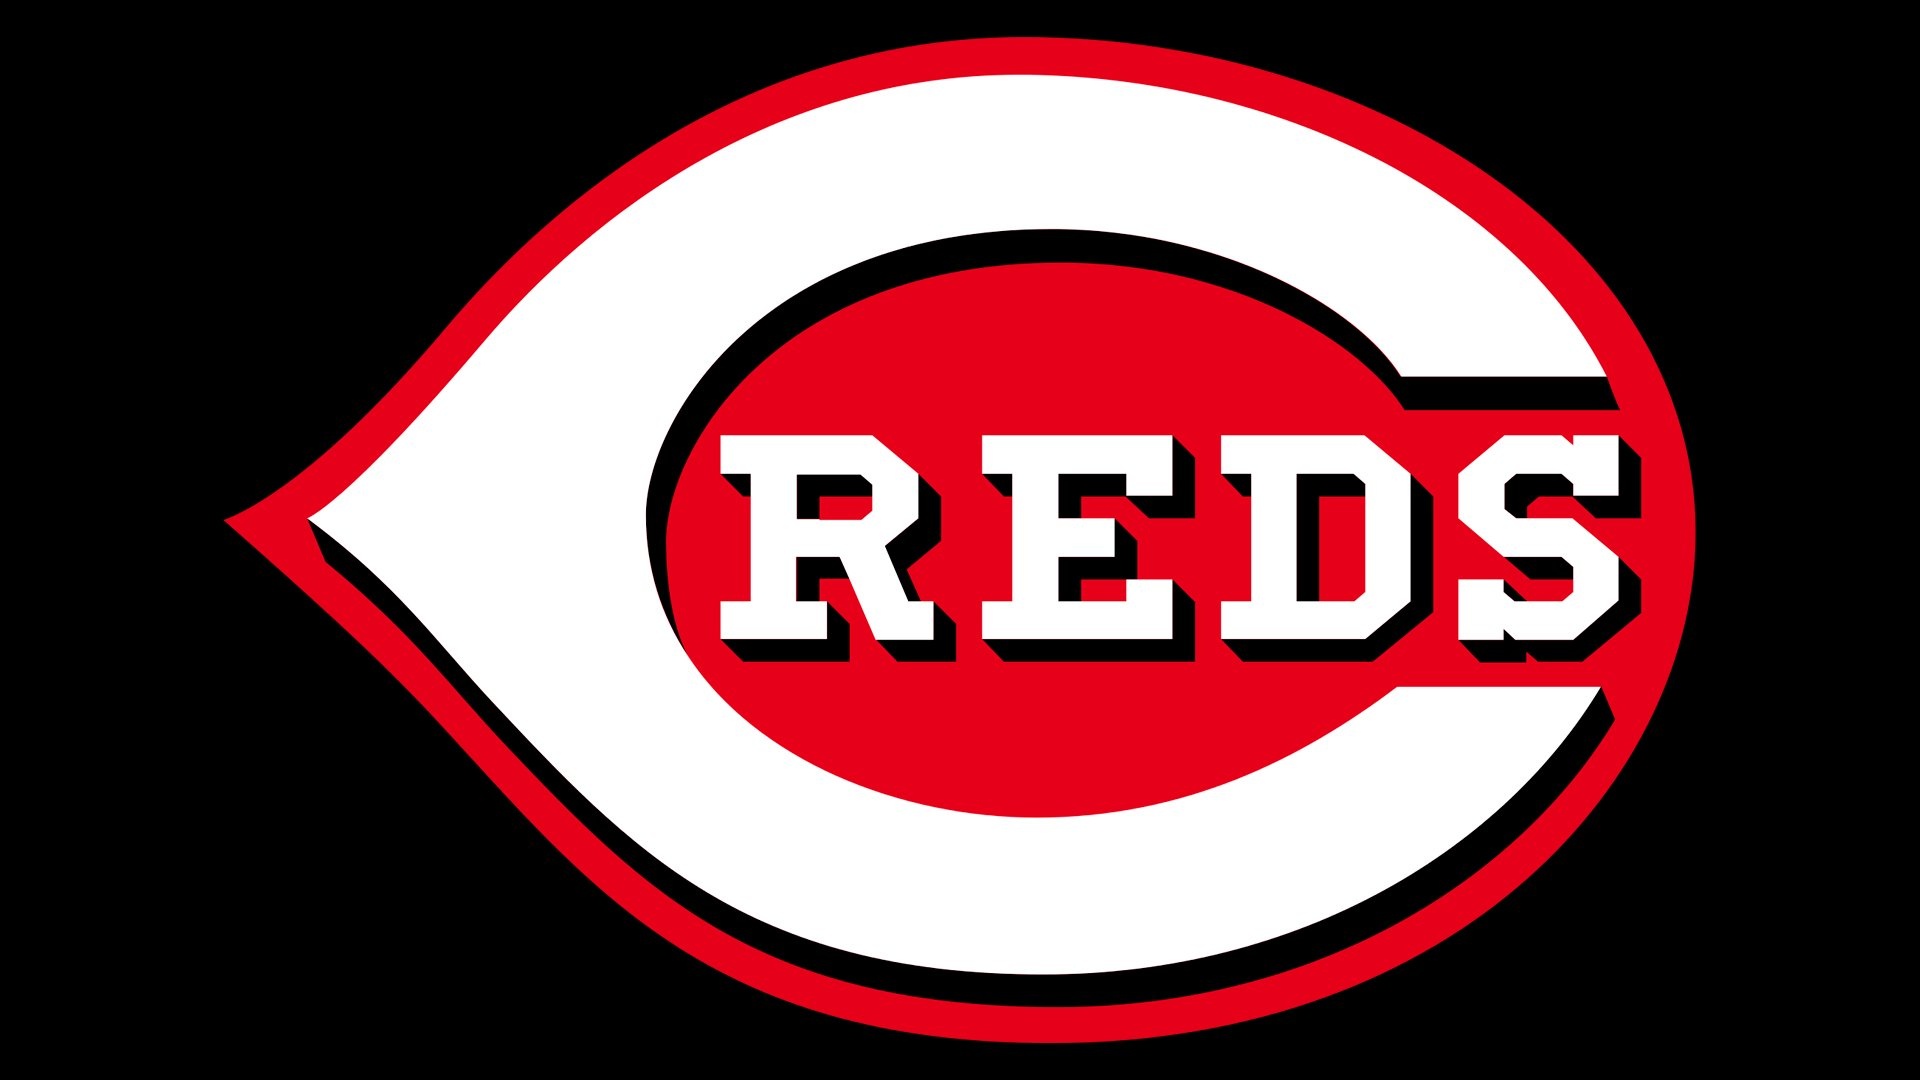 Cincinnati Reds, Sports, Story behind, Cincinnati reds logo, 1920x1080 Full HD Desktop